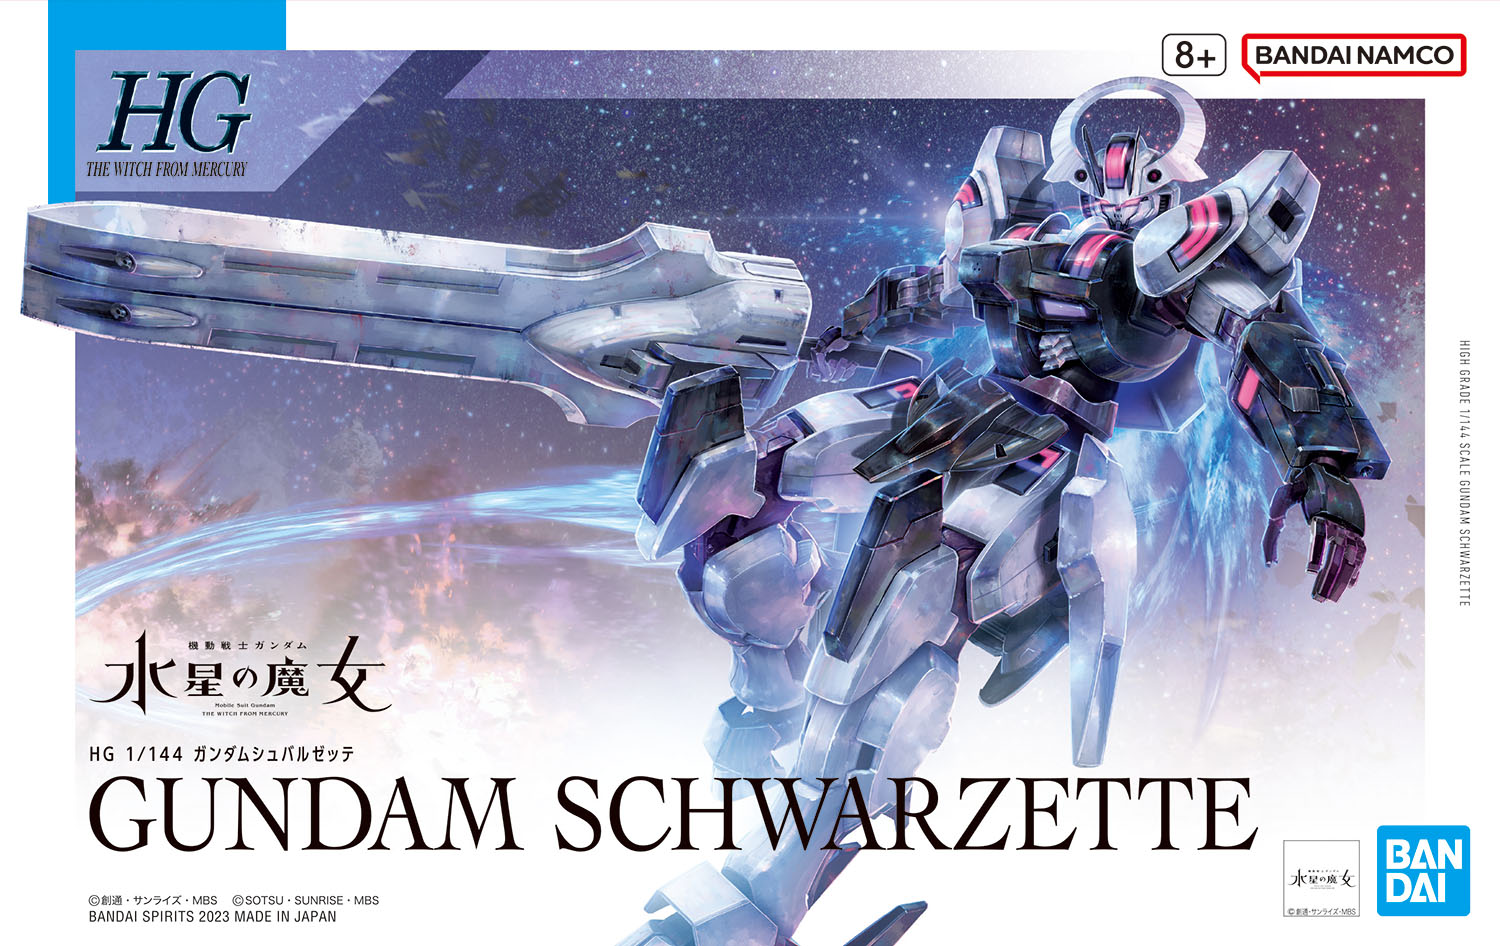 XVX-016 Gundam Aerial, The Gundam Wiki